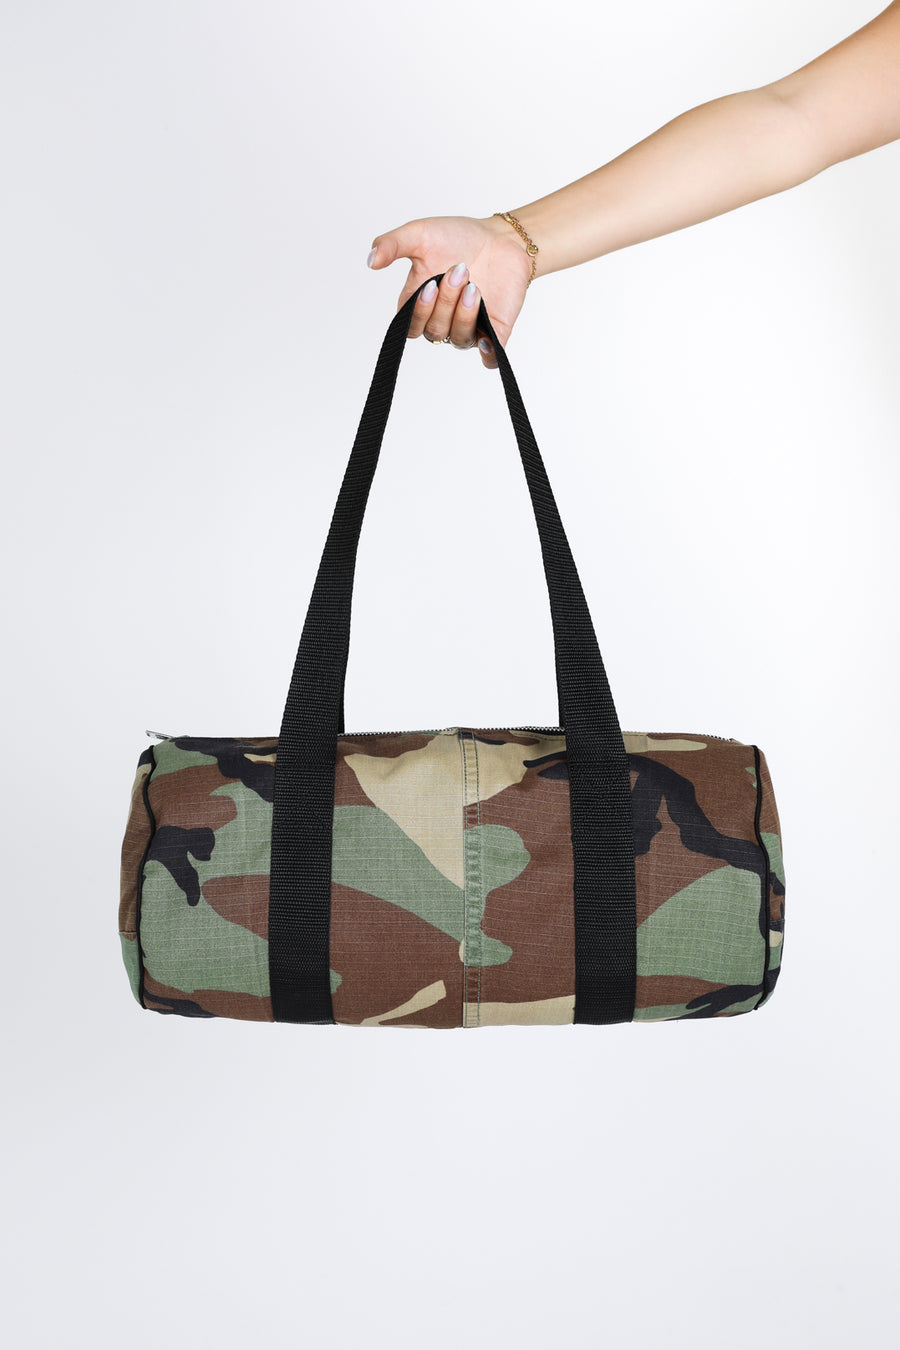 Rework Camo Medium Duffle Bag